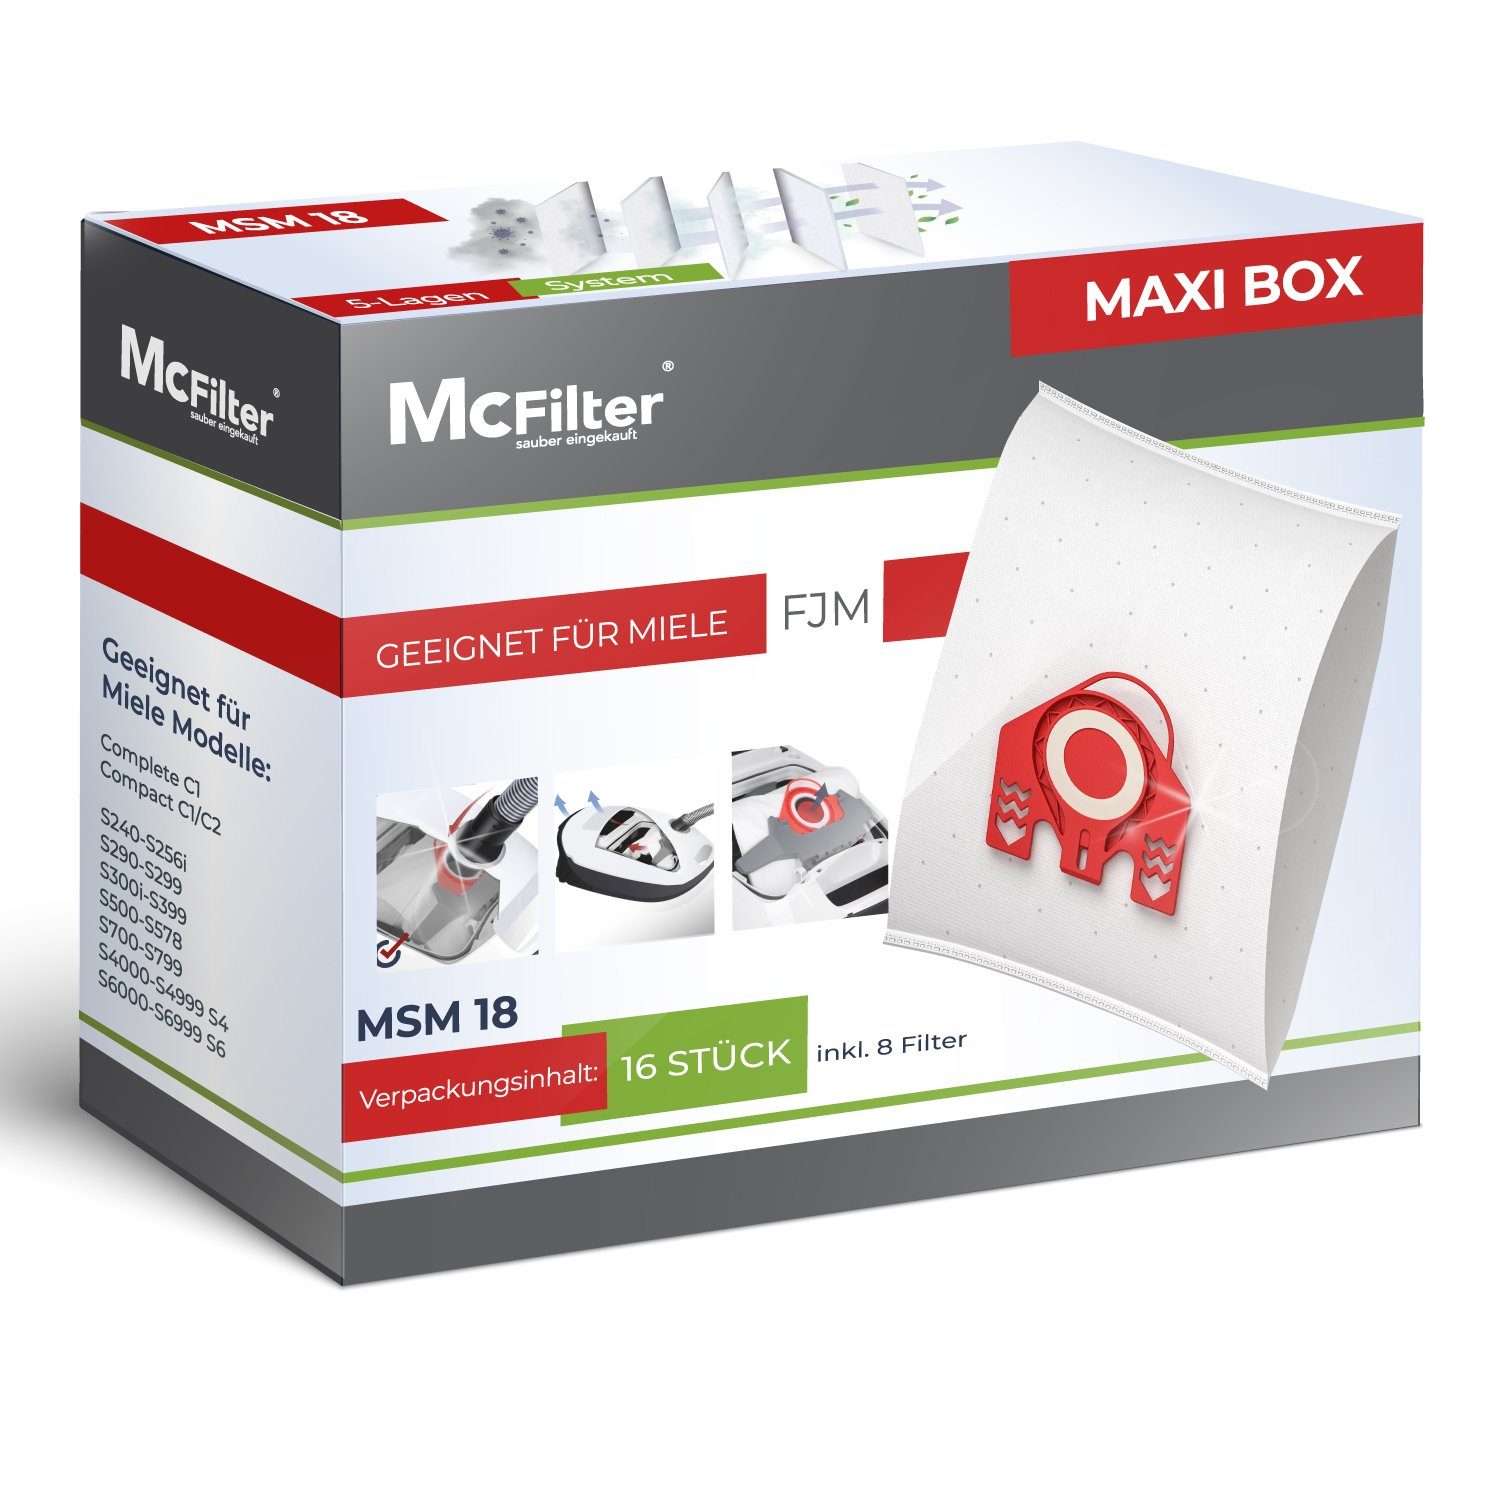 McFilter Staubsaugerbeutel MAXI BOX 16+8, passend für Miele S511, S512-1, S548 Plus, inkl. 8 Filter, 16 St., Top Miele Alternative zu 9917710, wie 10408420